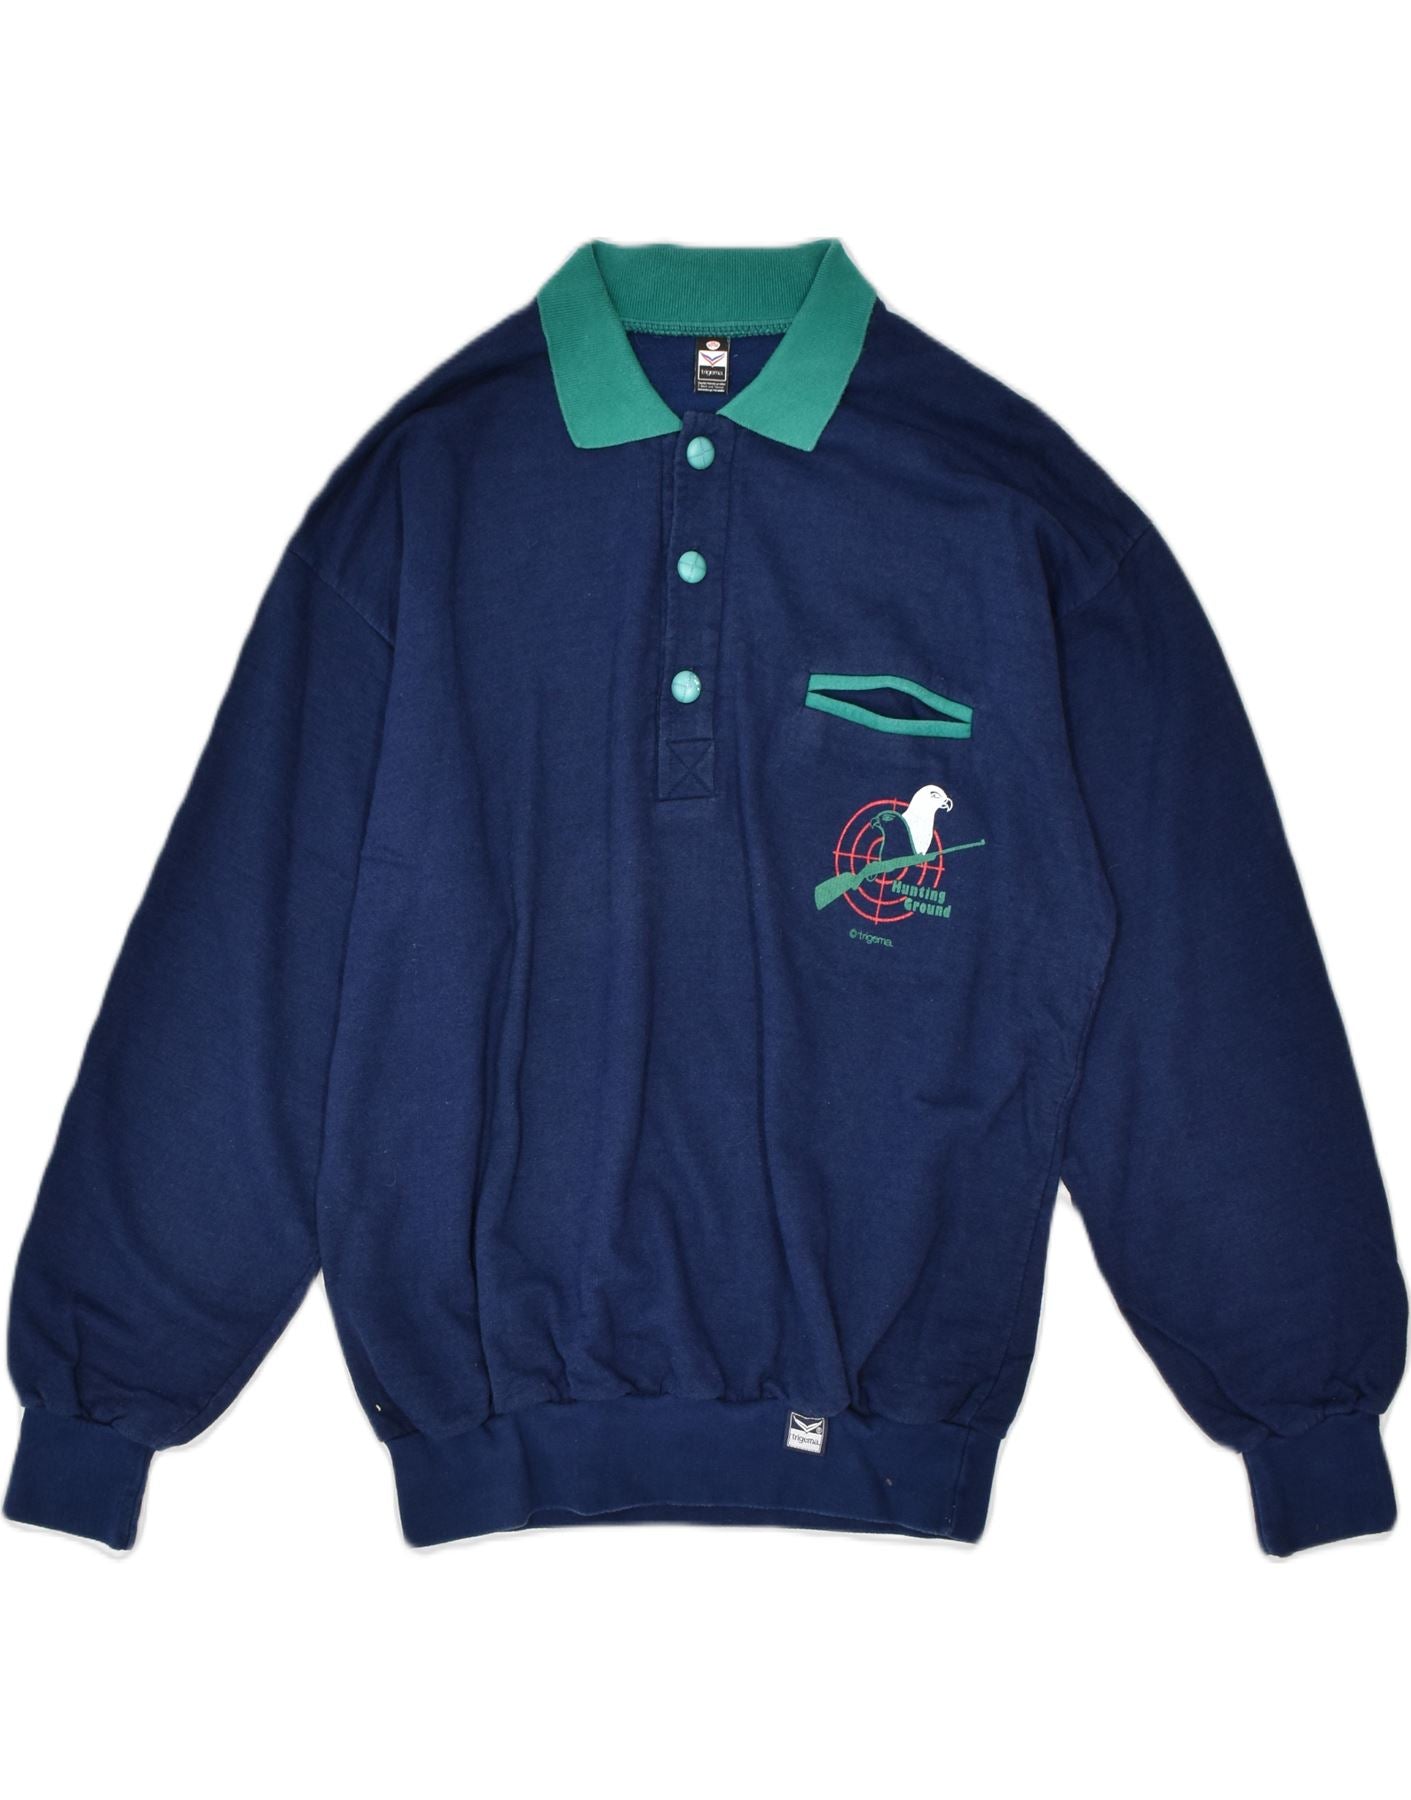 TRIGEMA Mens Polo Second-Hand Clothing Vintage Jumper Cotton | & | Thrift Neck XL Online Shop Sweater Navy Blue